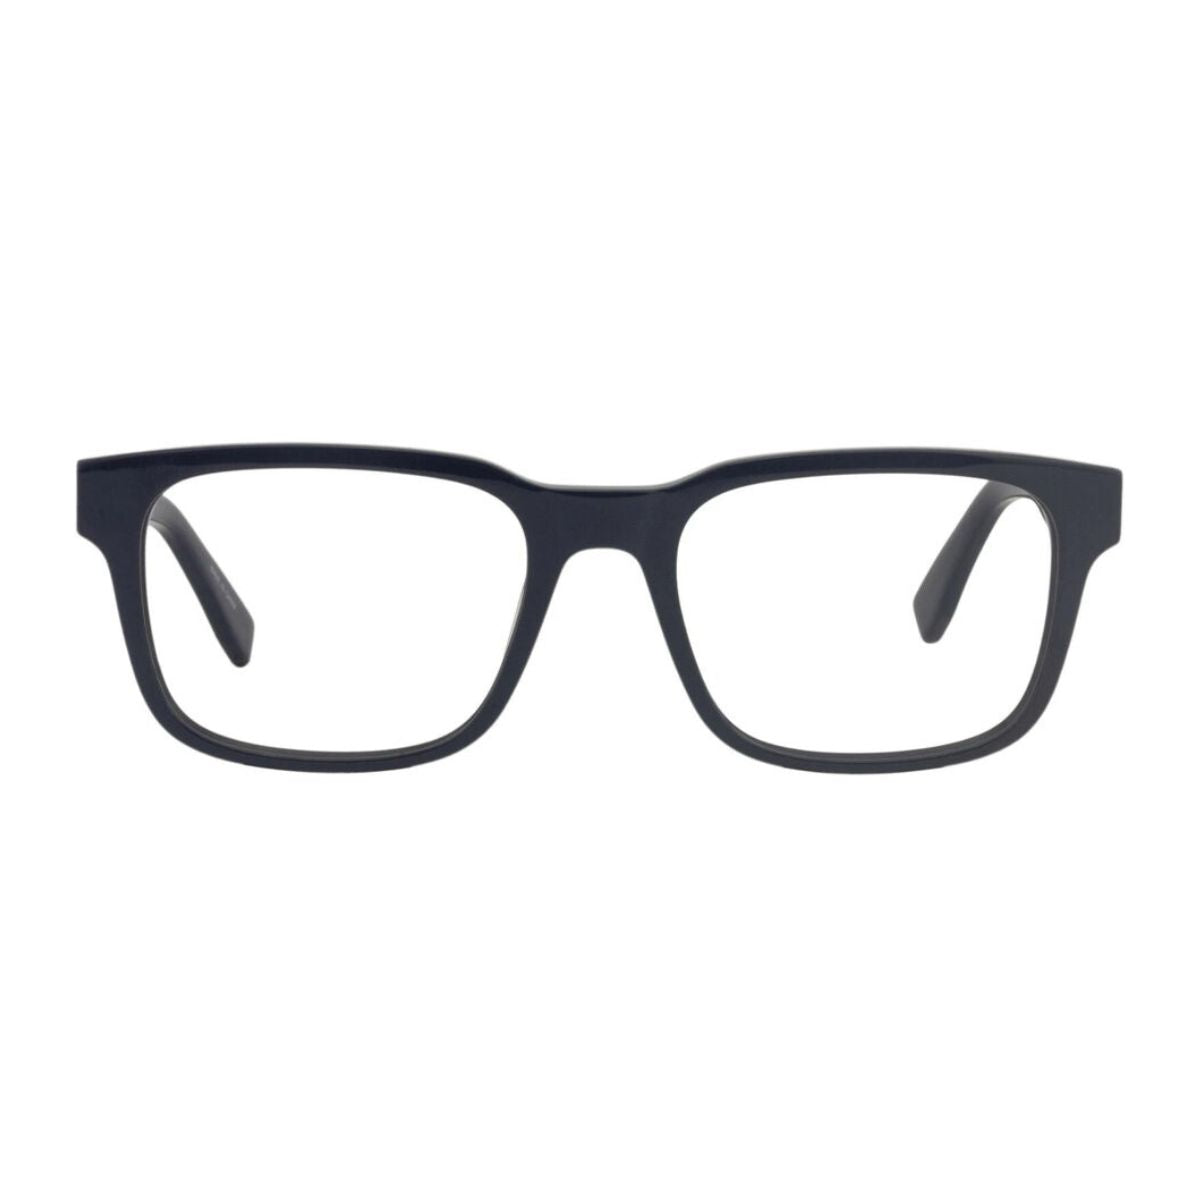 "Lacoste 2905 400 square shape eyeglasses frame for men and women at optorium"